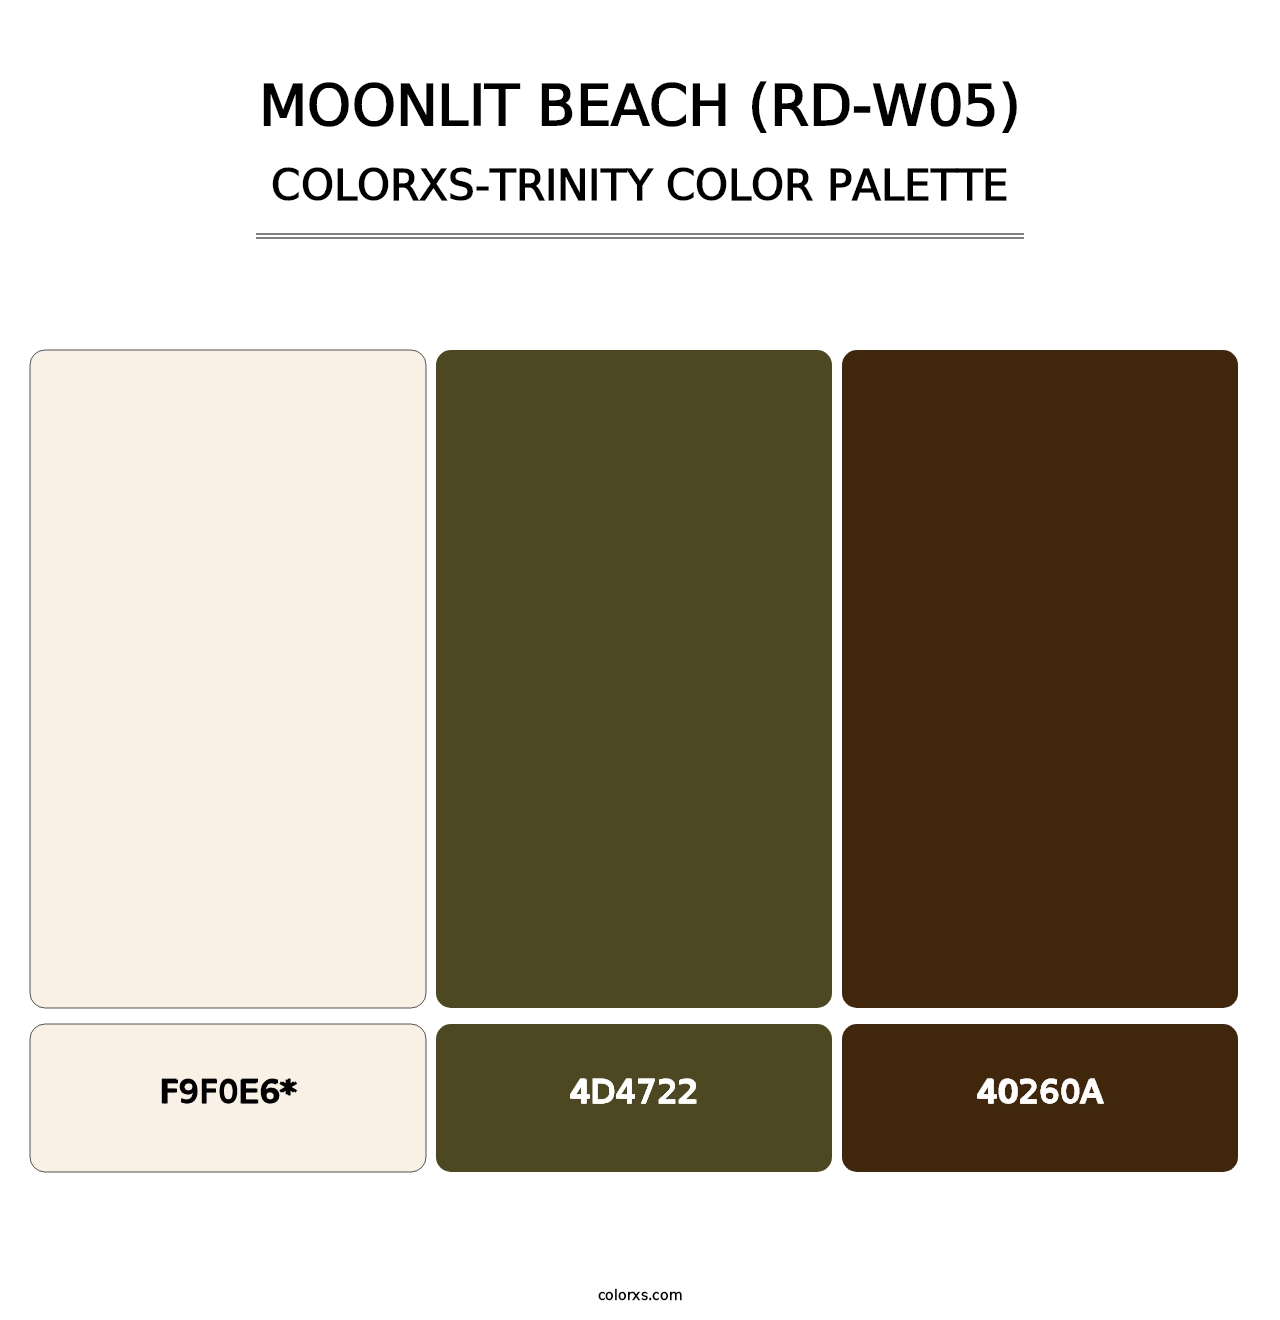 Moonlit Beach (RD-W05) - Colorxs Trinity Palette